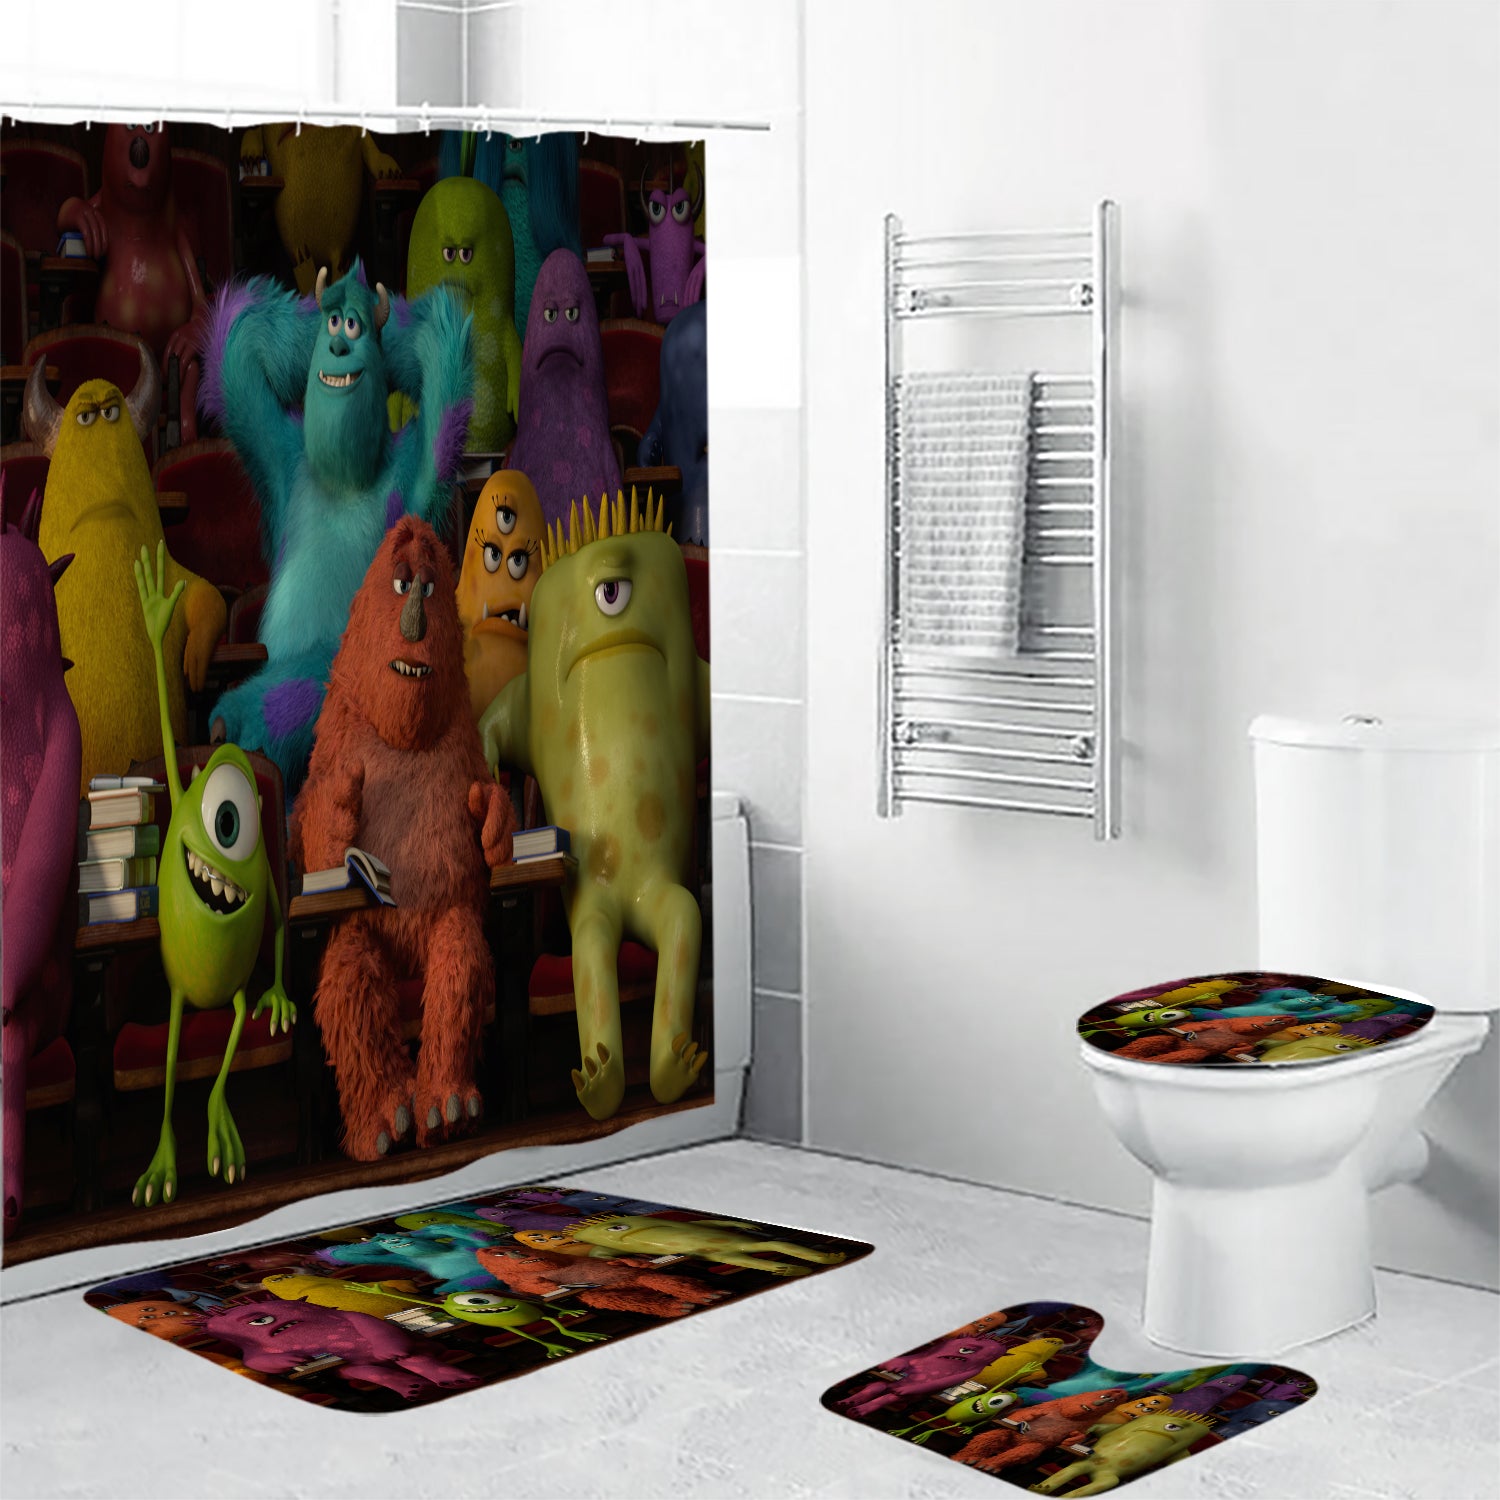 Characters v16 Monsters Inc Monsters University Movie Disney Pixar Waterproof Shower Curtain Non-Slip Toilet Lid Cover Bath Mat - Bathroom Set